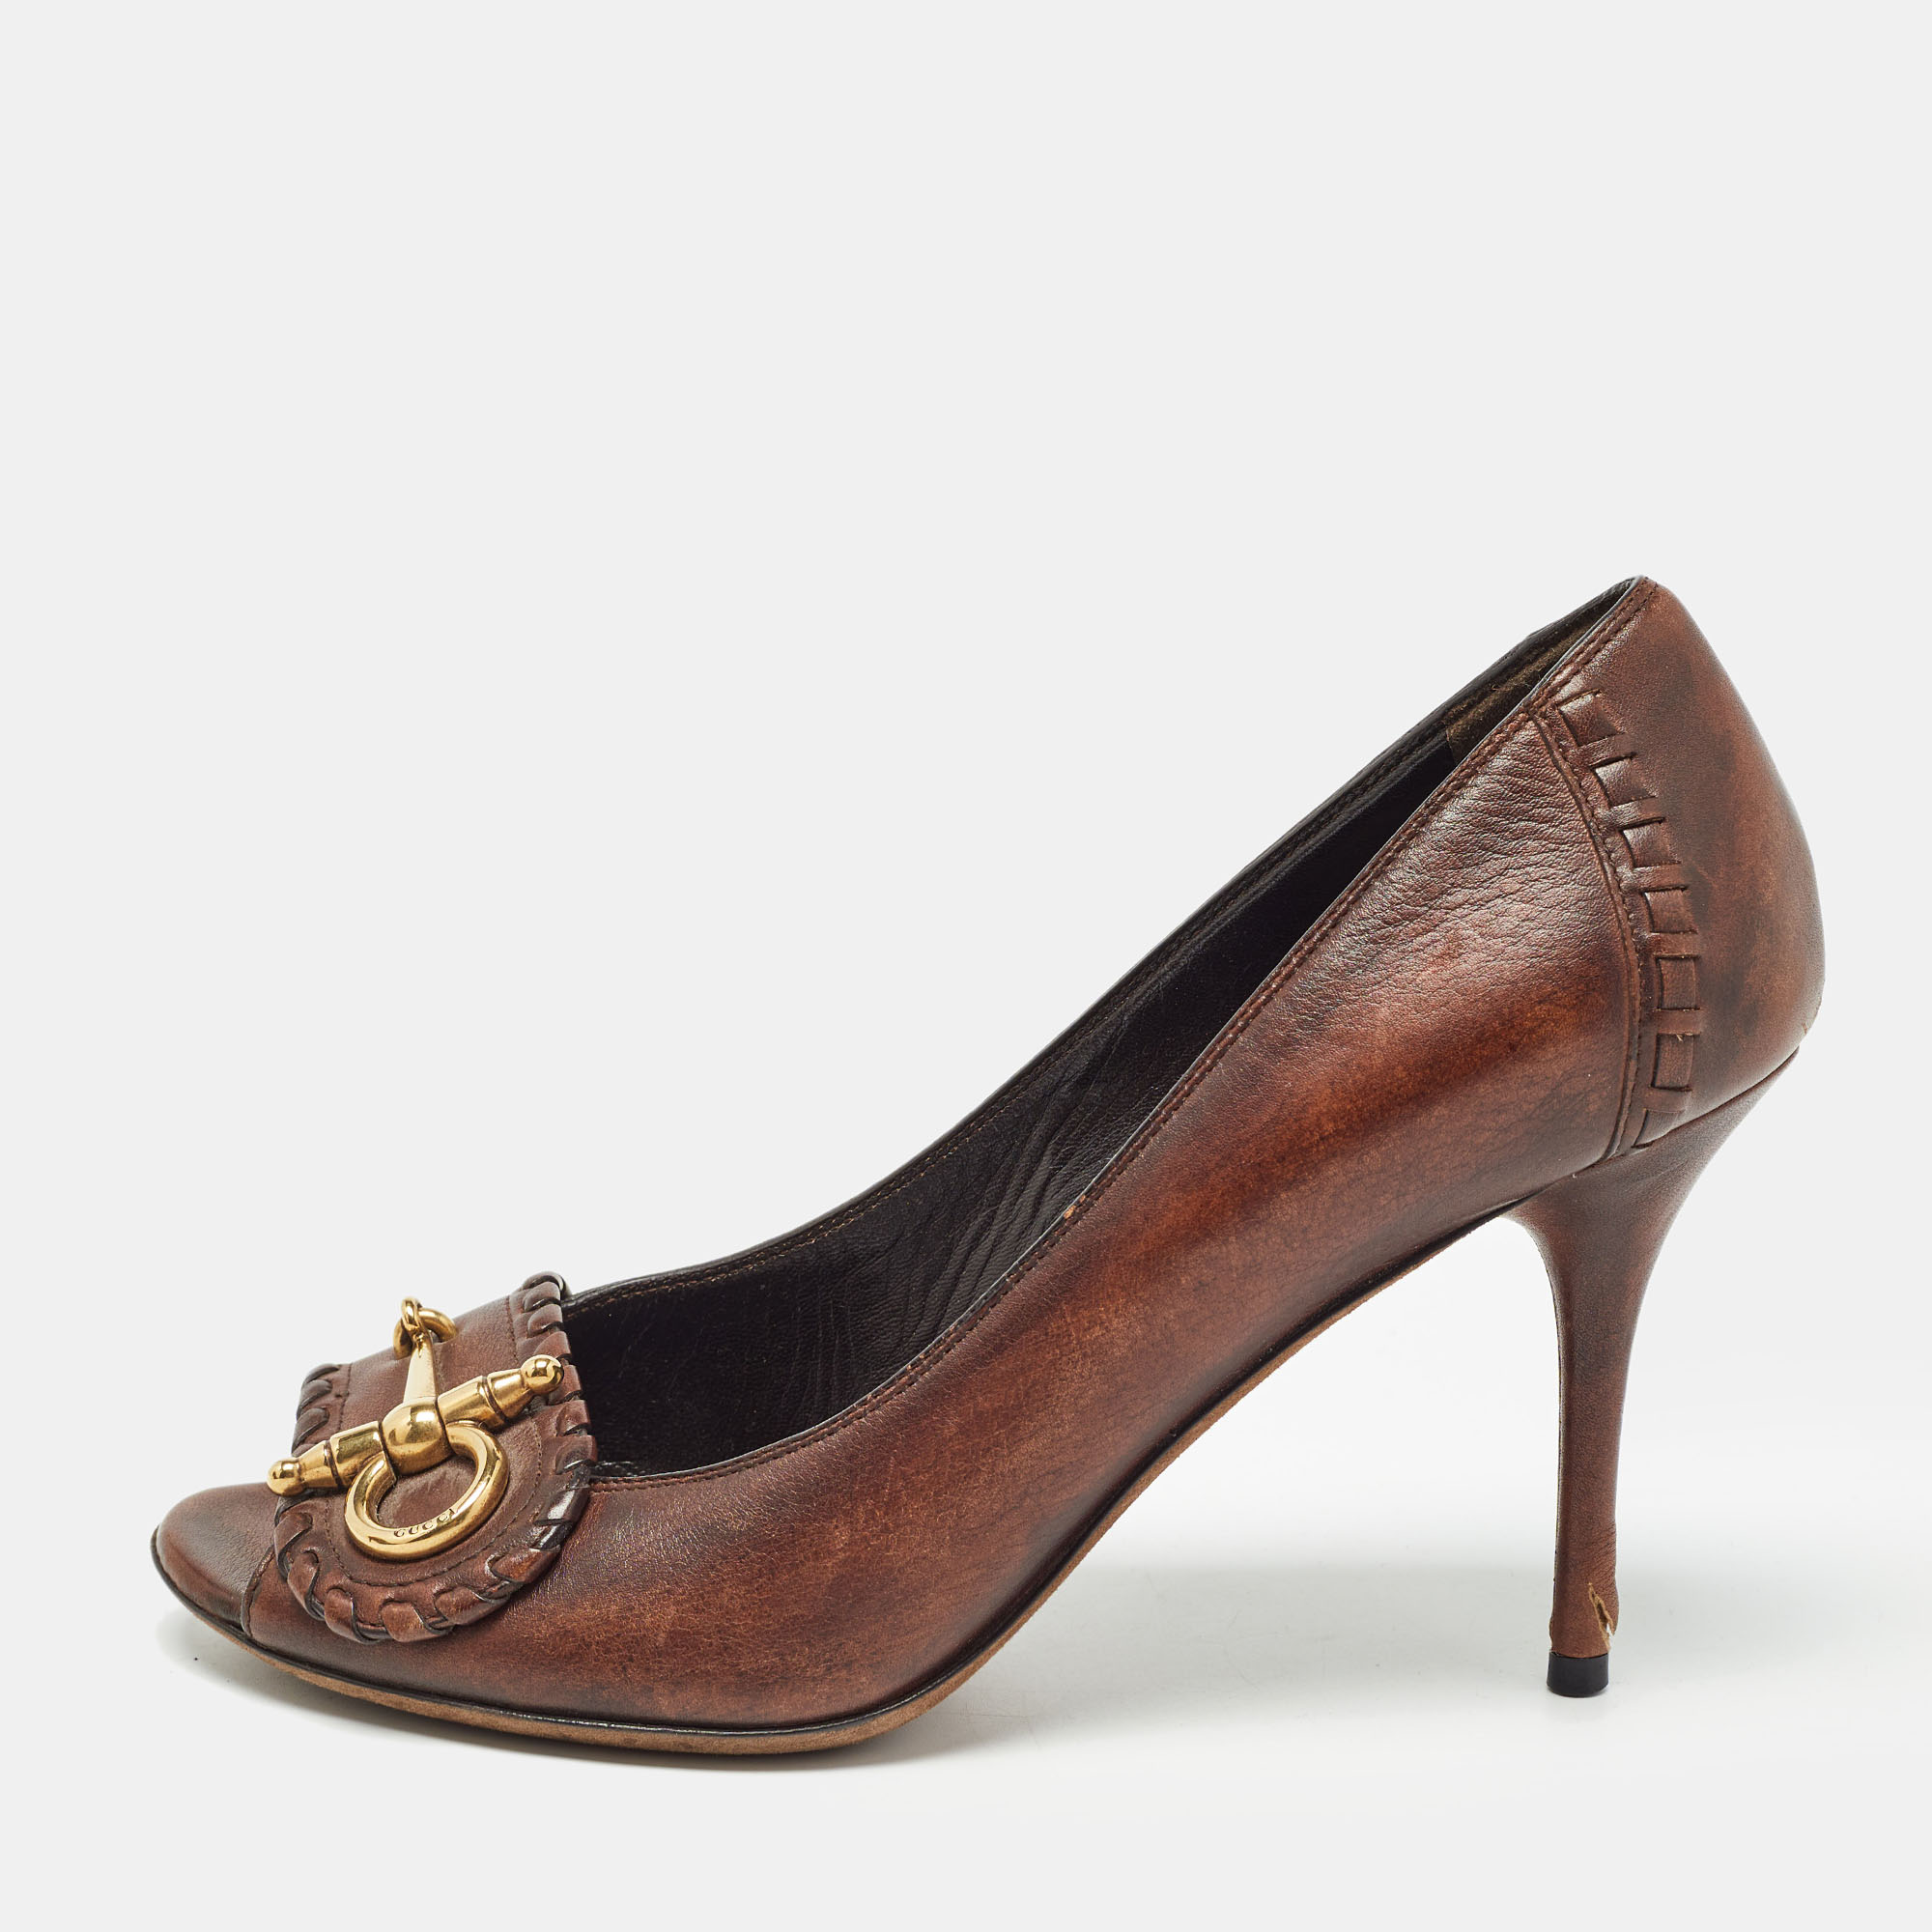 Gucci brown leather horsebit open toe pumps size 37.5